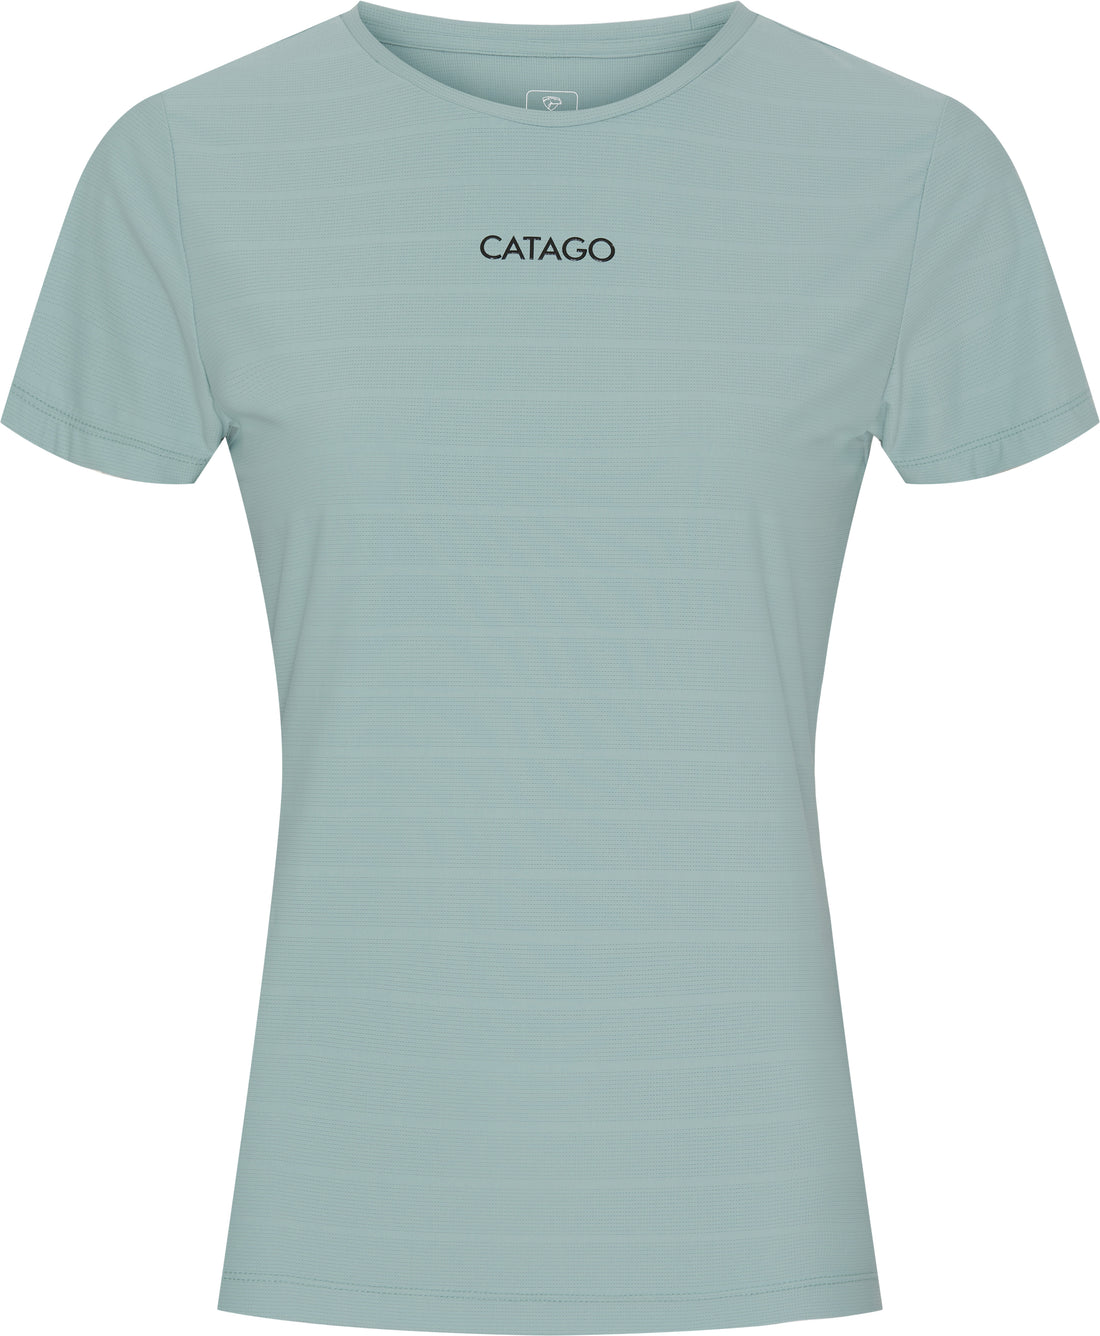 Catago - T-shirt, dame, stone blue, Novel SS